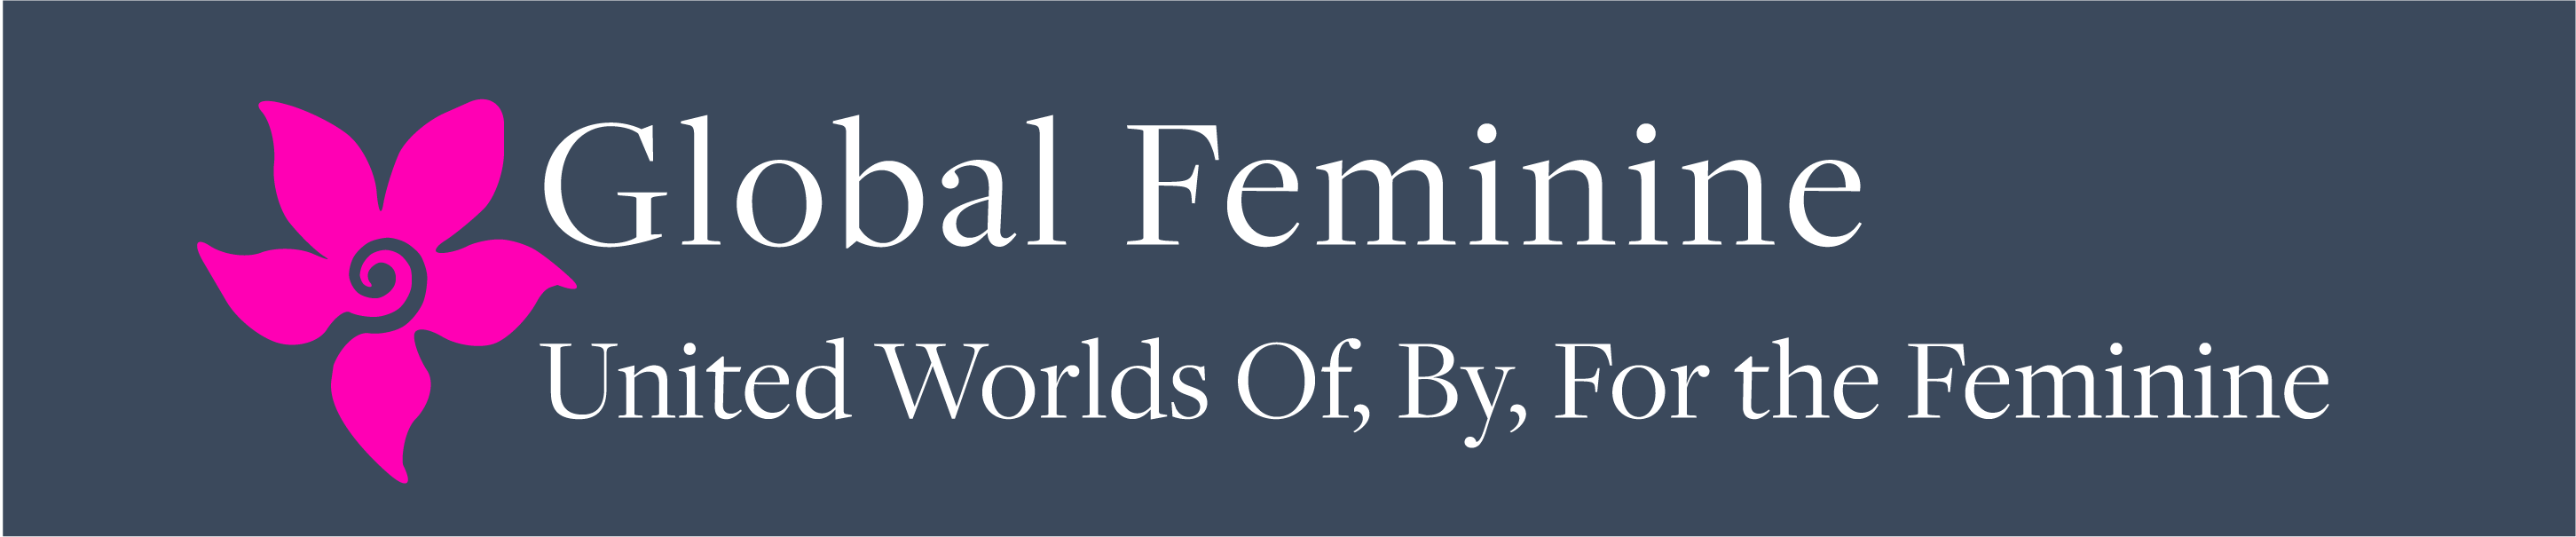 Global Feminine Image